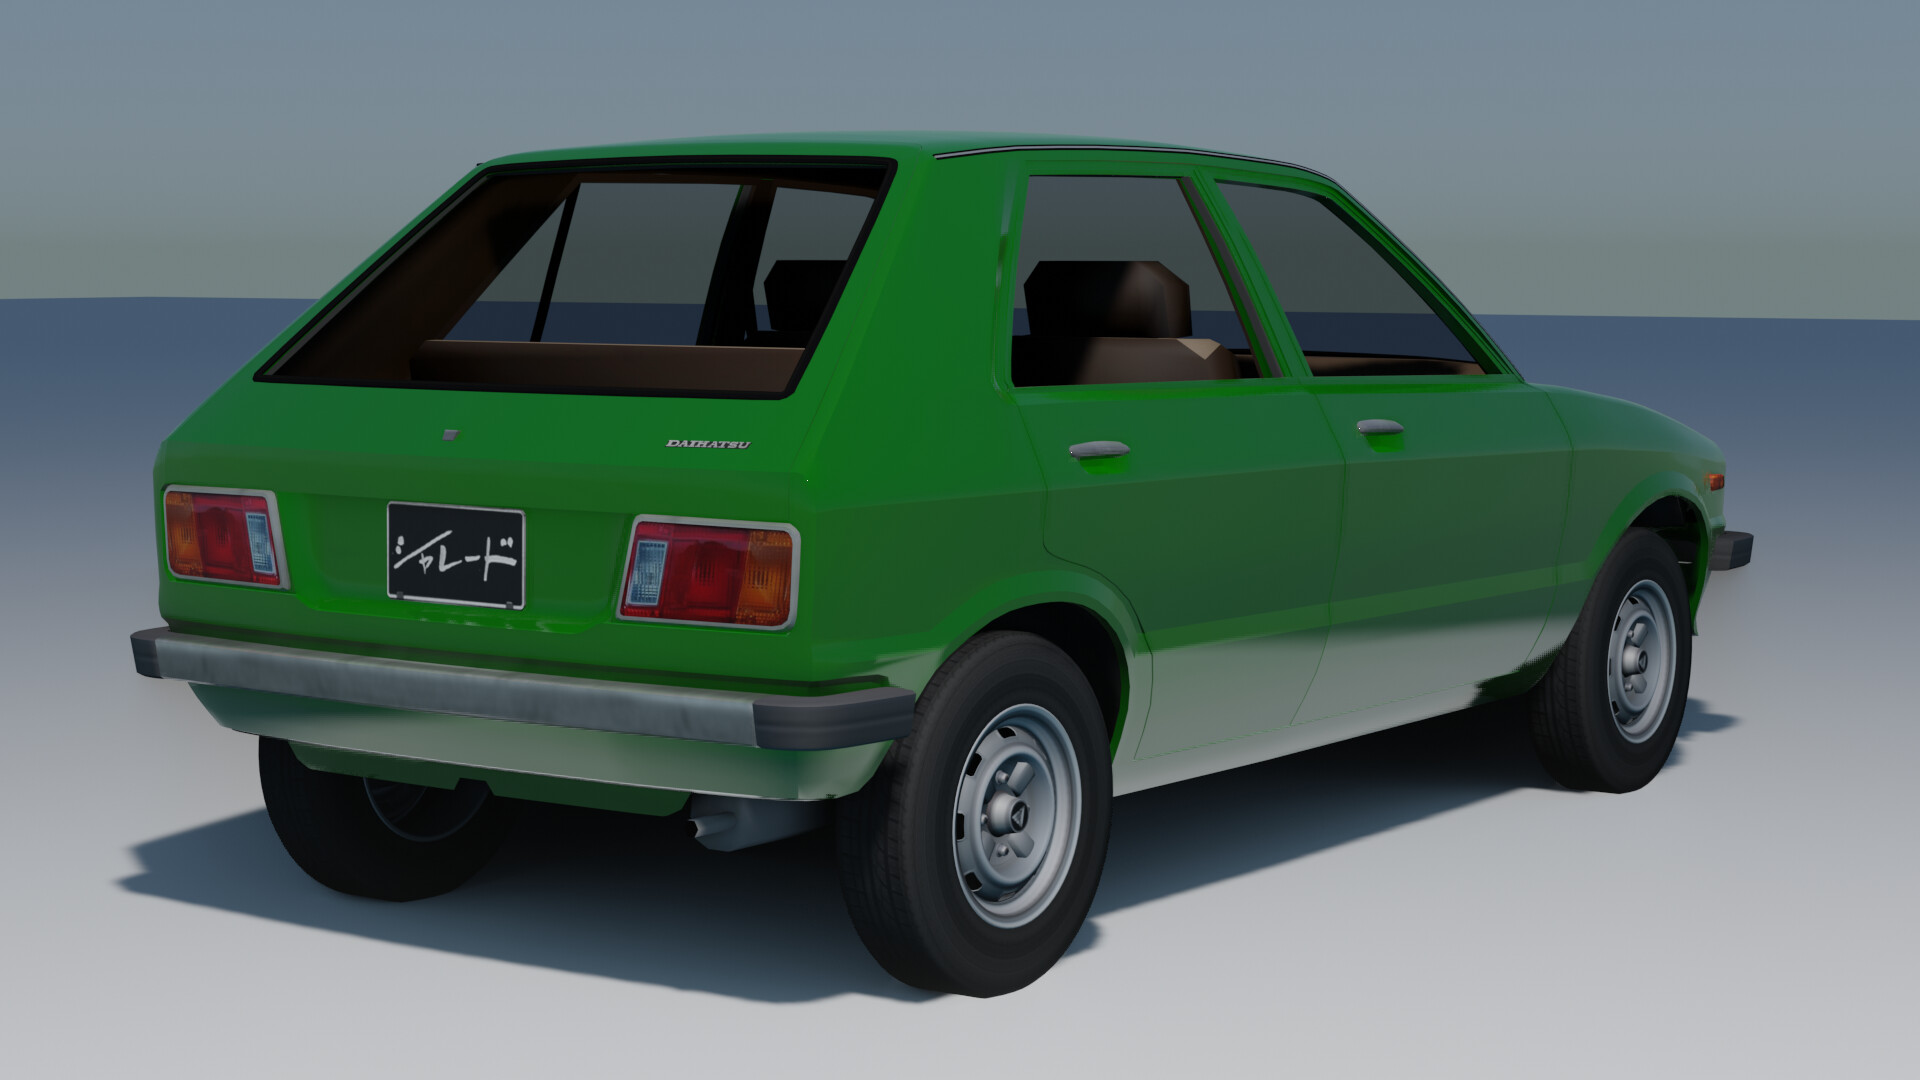 Daihatsu Charade G10 Review: The Eco-Car That Could